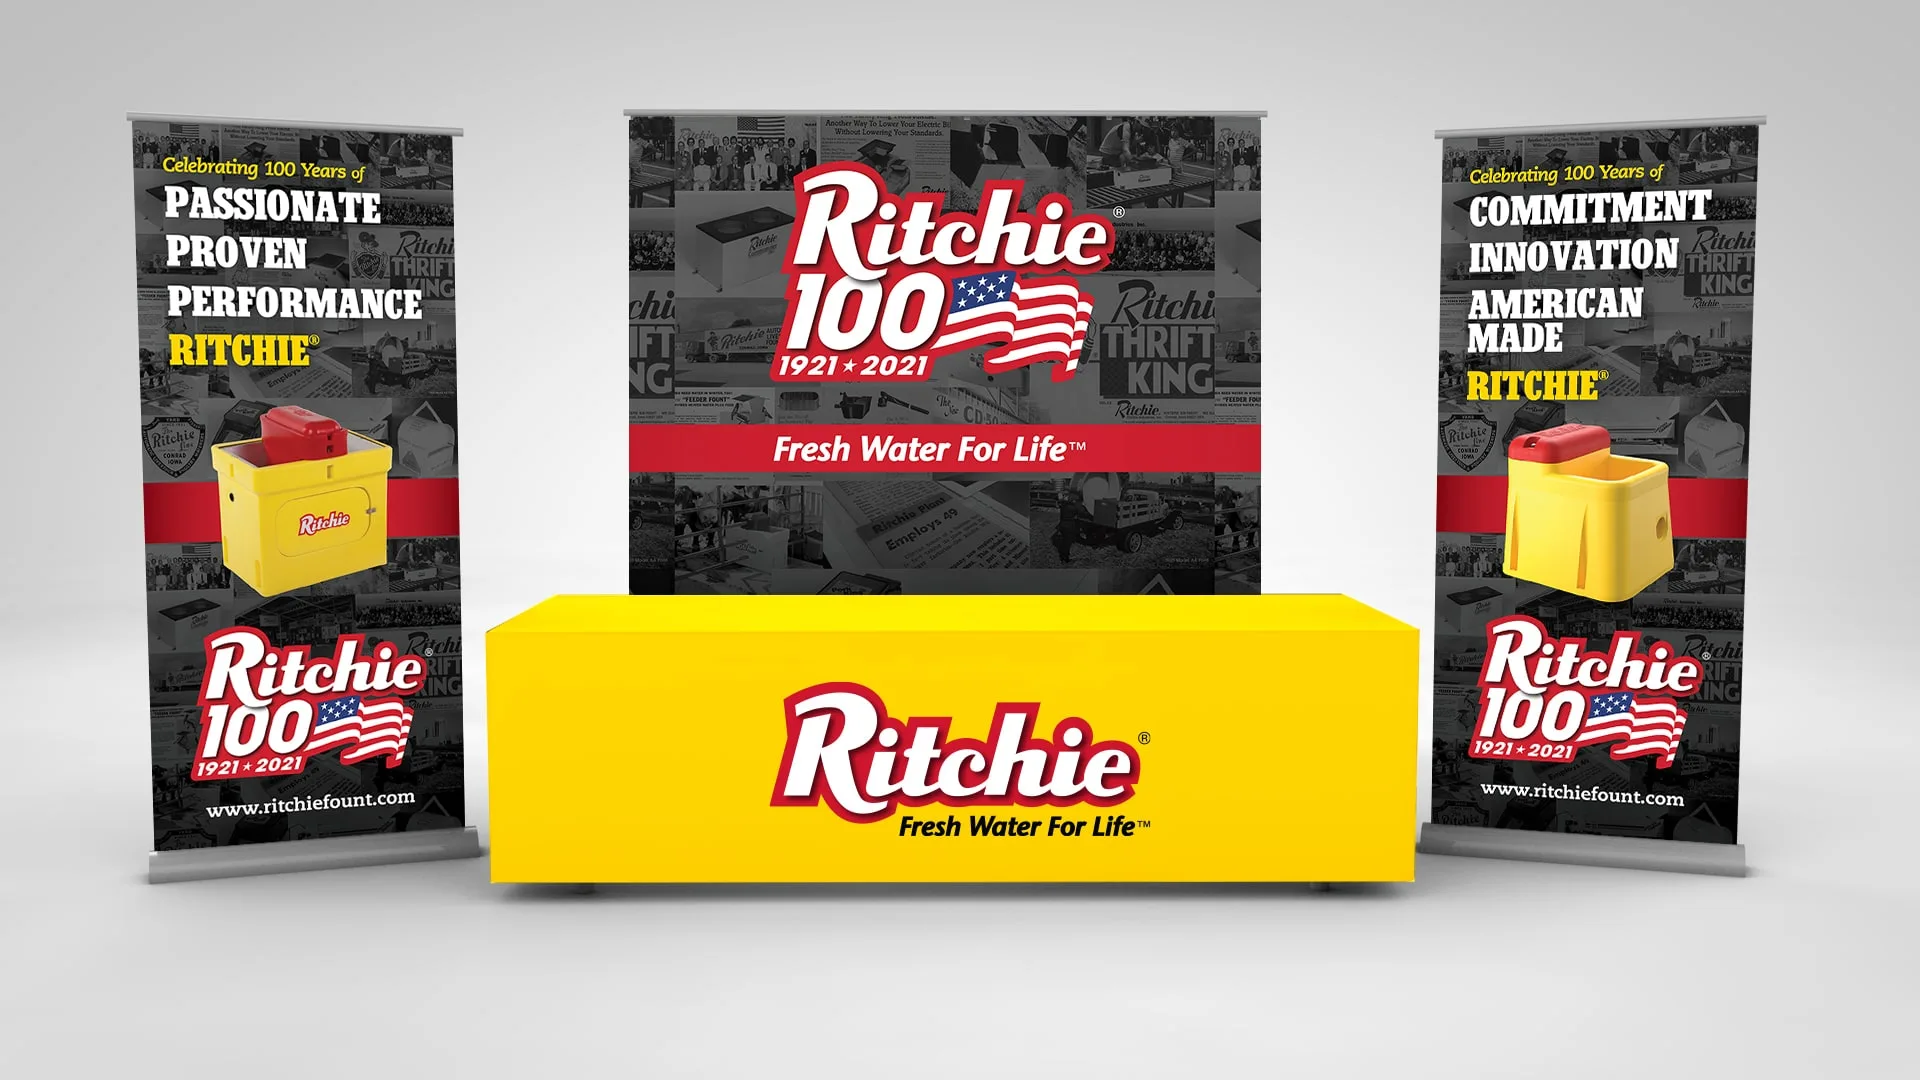 Ritchie 100 tradeshow booth design, graphic design, branding, 3D design